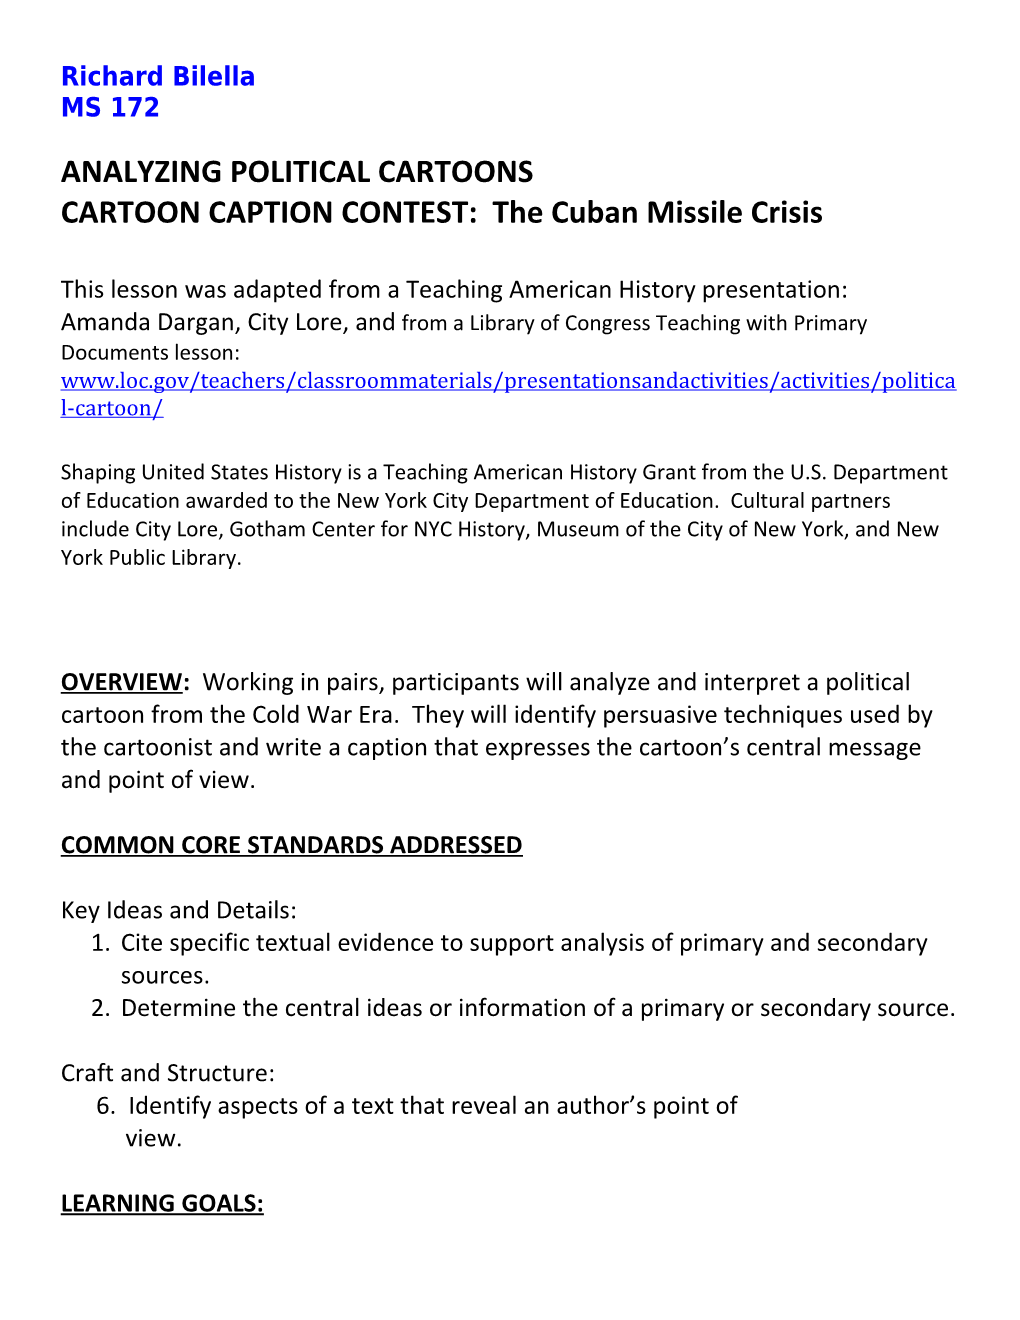 CARTOON CAPTION CONTEST: the Cuban Missile Crisis